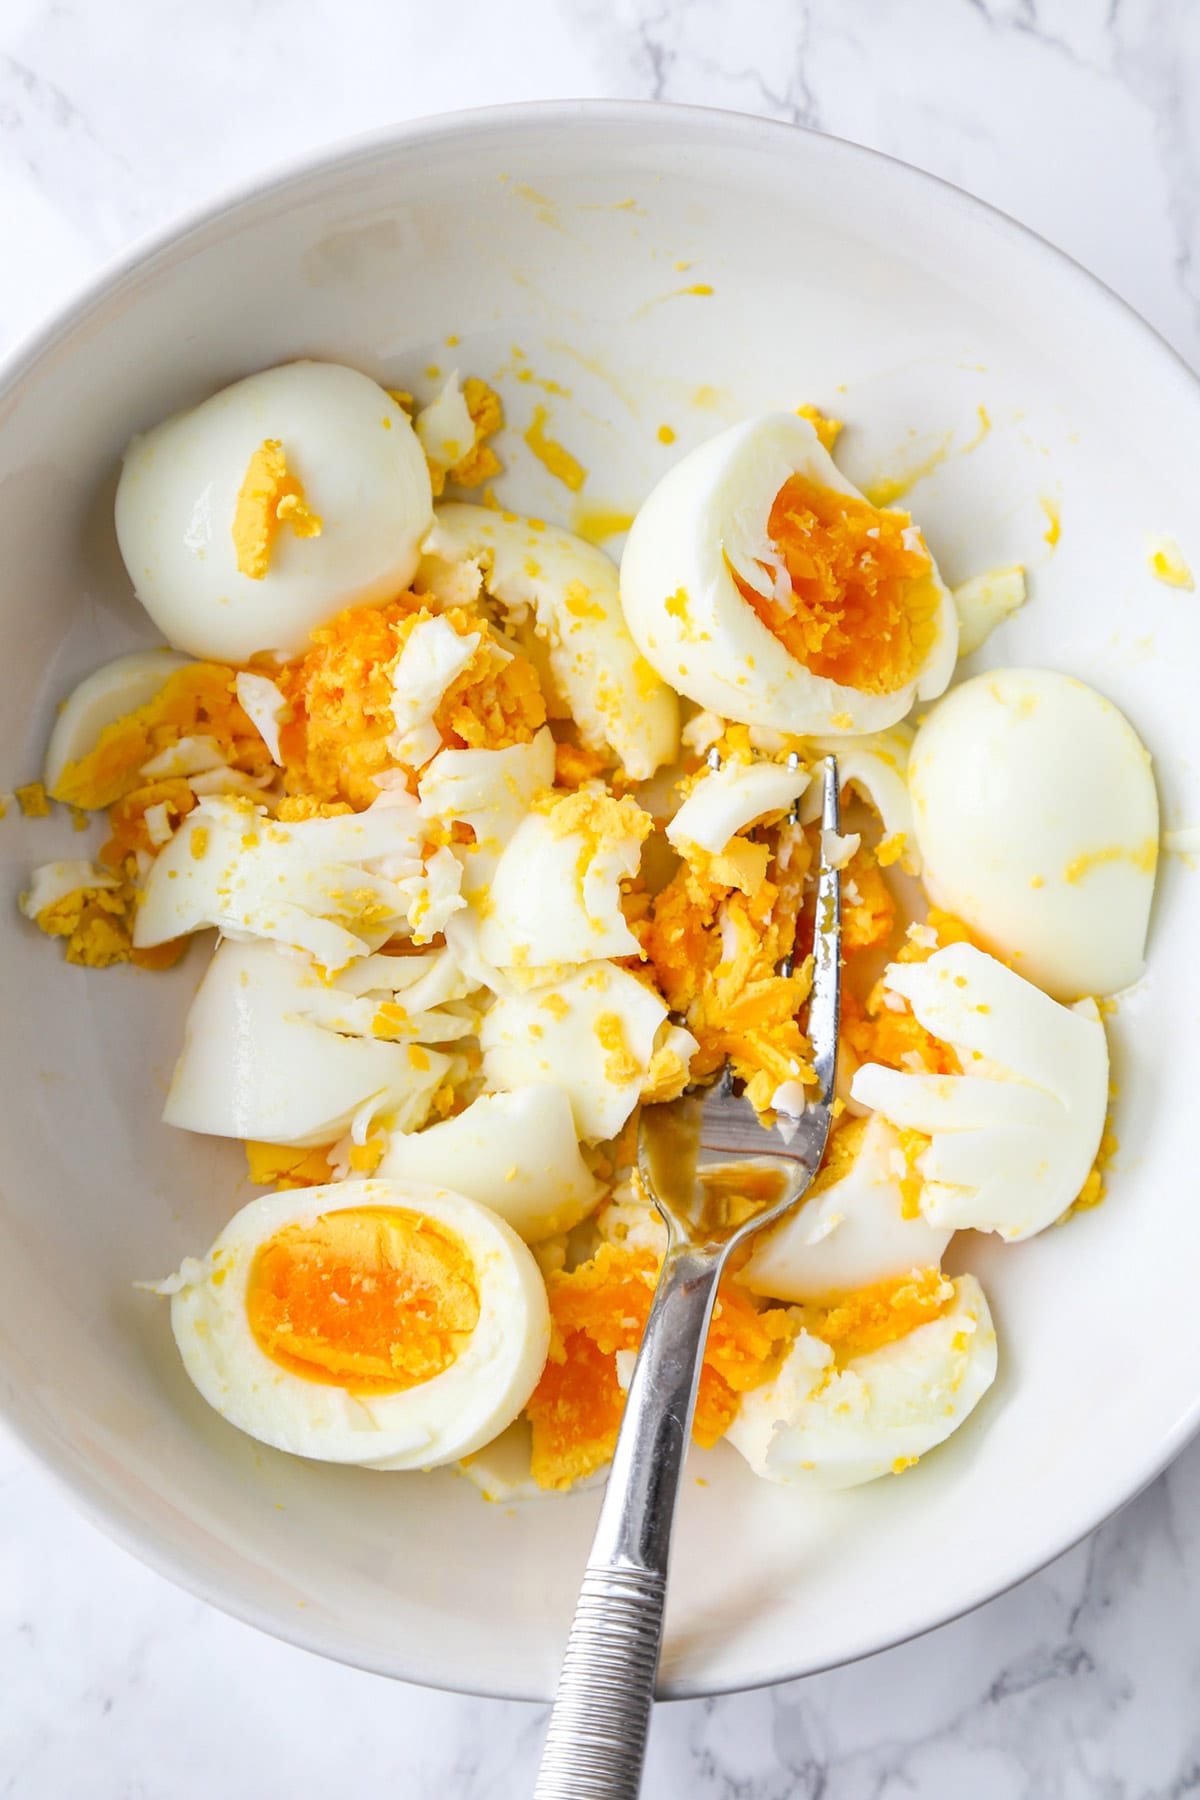 Mashed boiled eggs